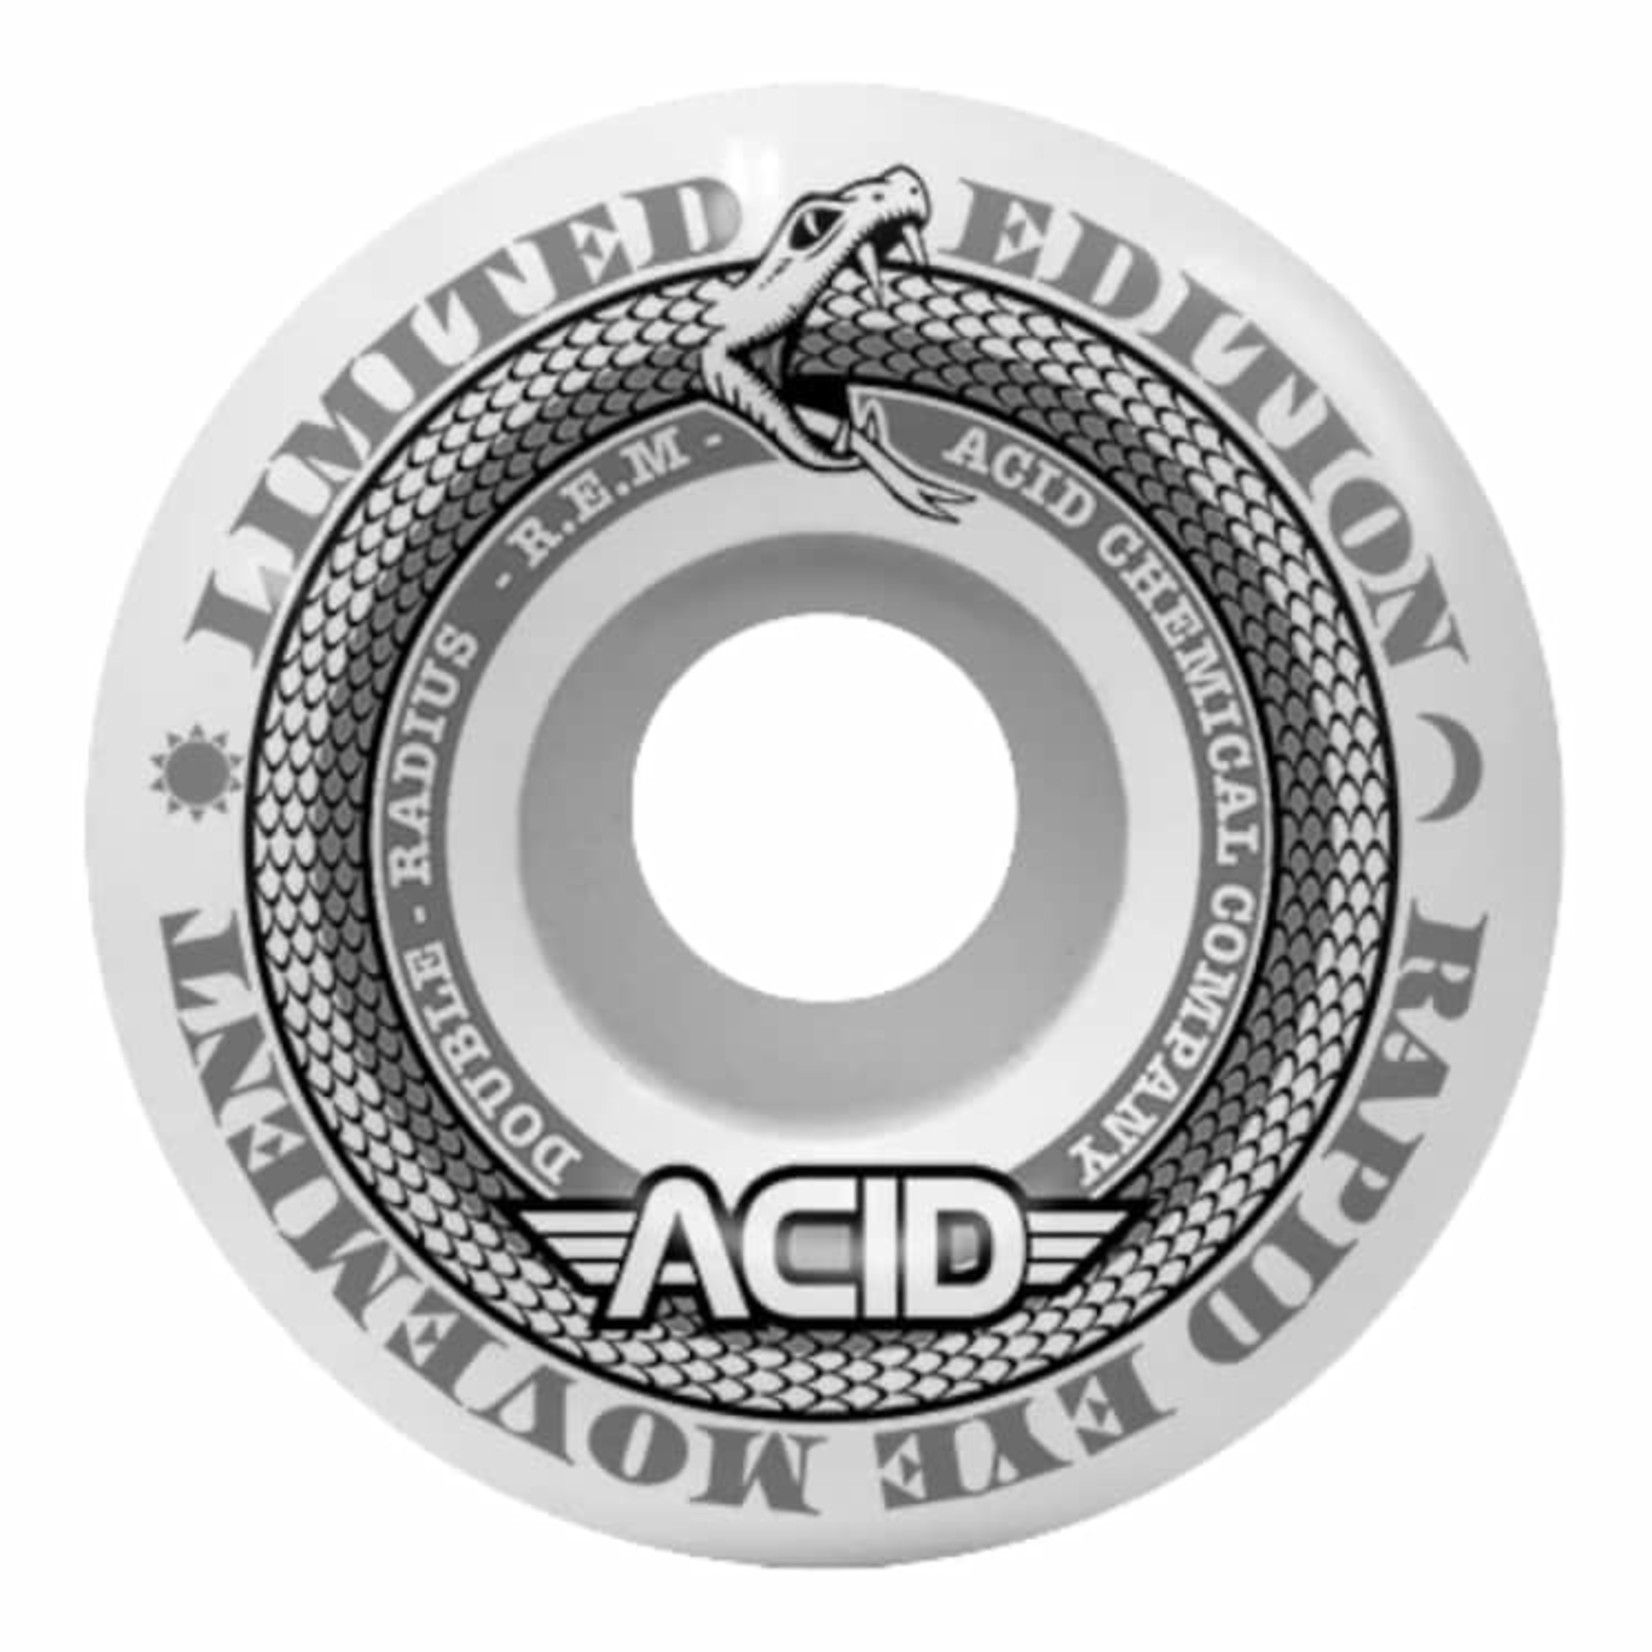 Acid Chemical Acid 99a REM "Limited" Double Radius 53mm (White)